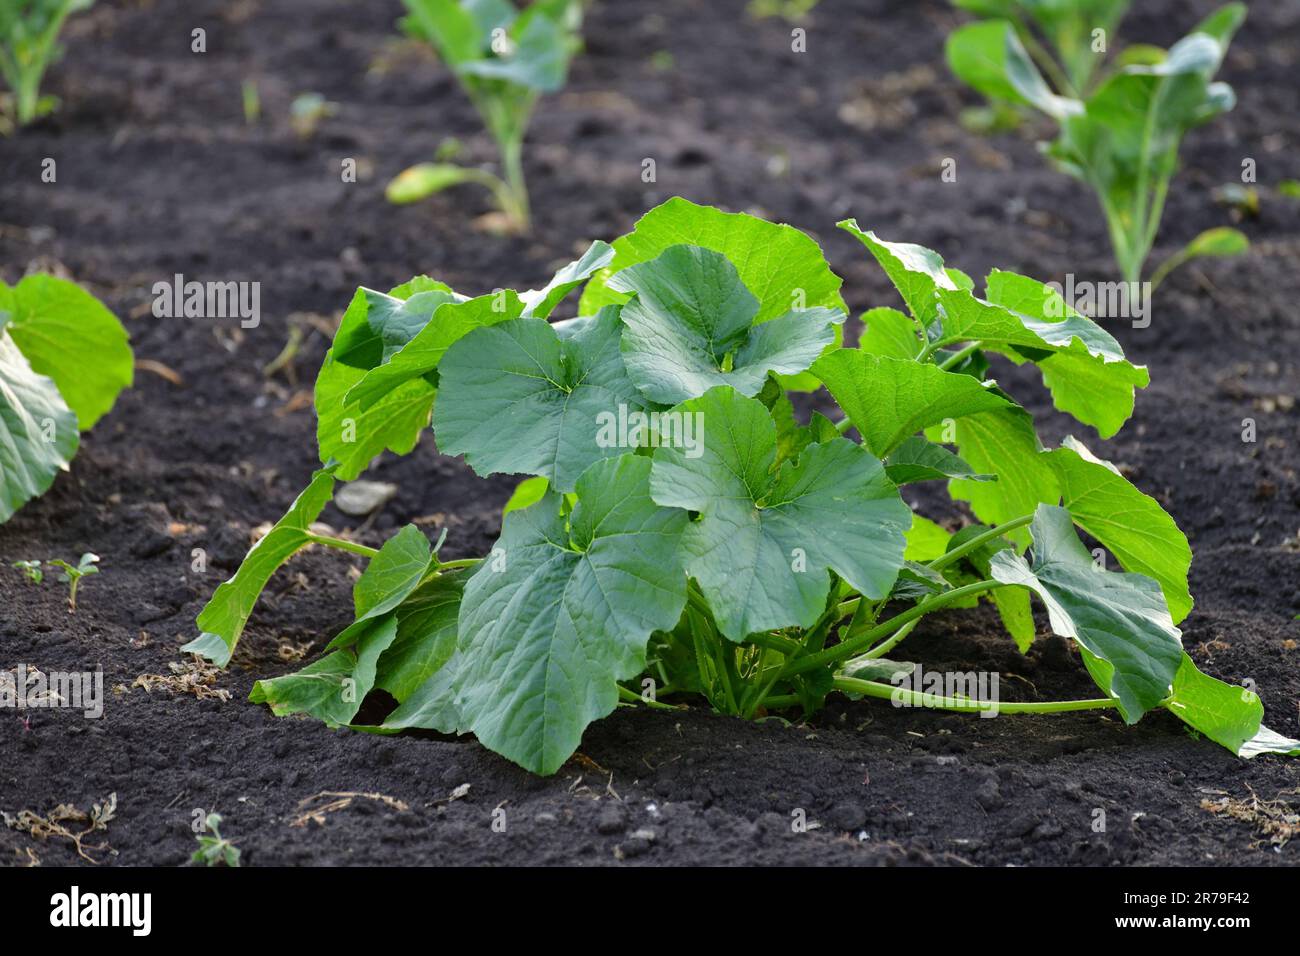 Young green vegetable marrow grow in garden bed Stock Photo